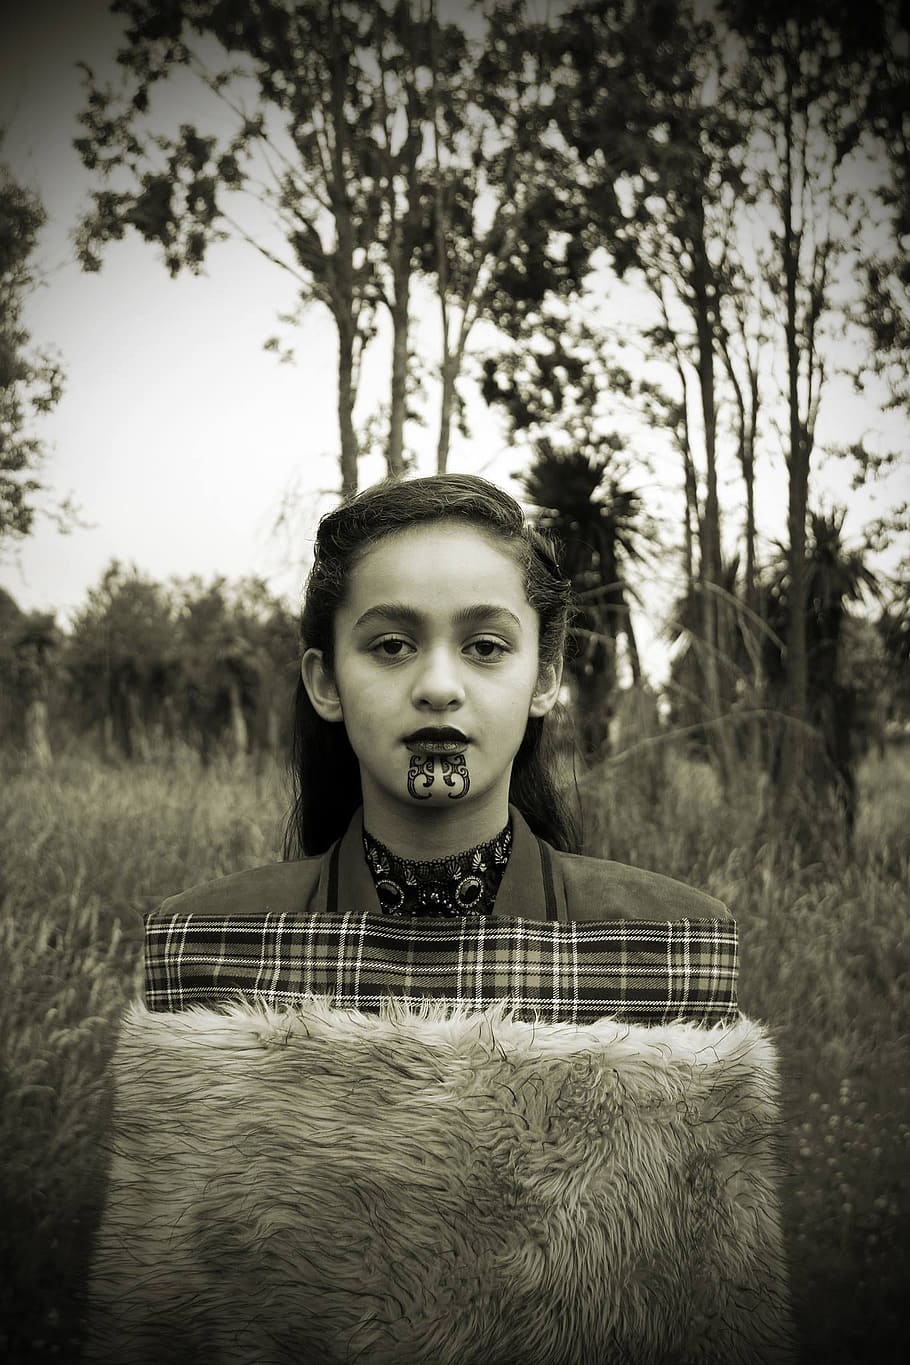 gris, fotografía a escala, mujer, en pie, tre, niña, retrato, tradición, cultura, maorí